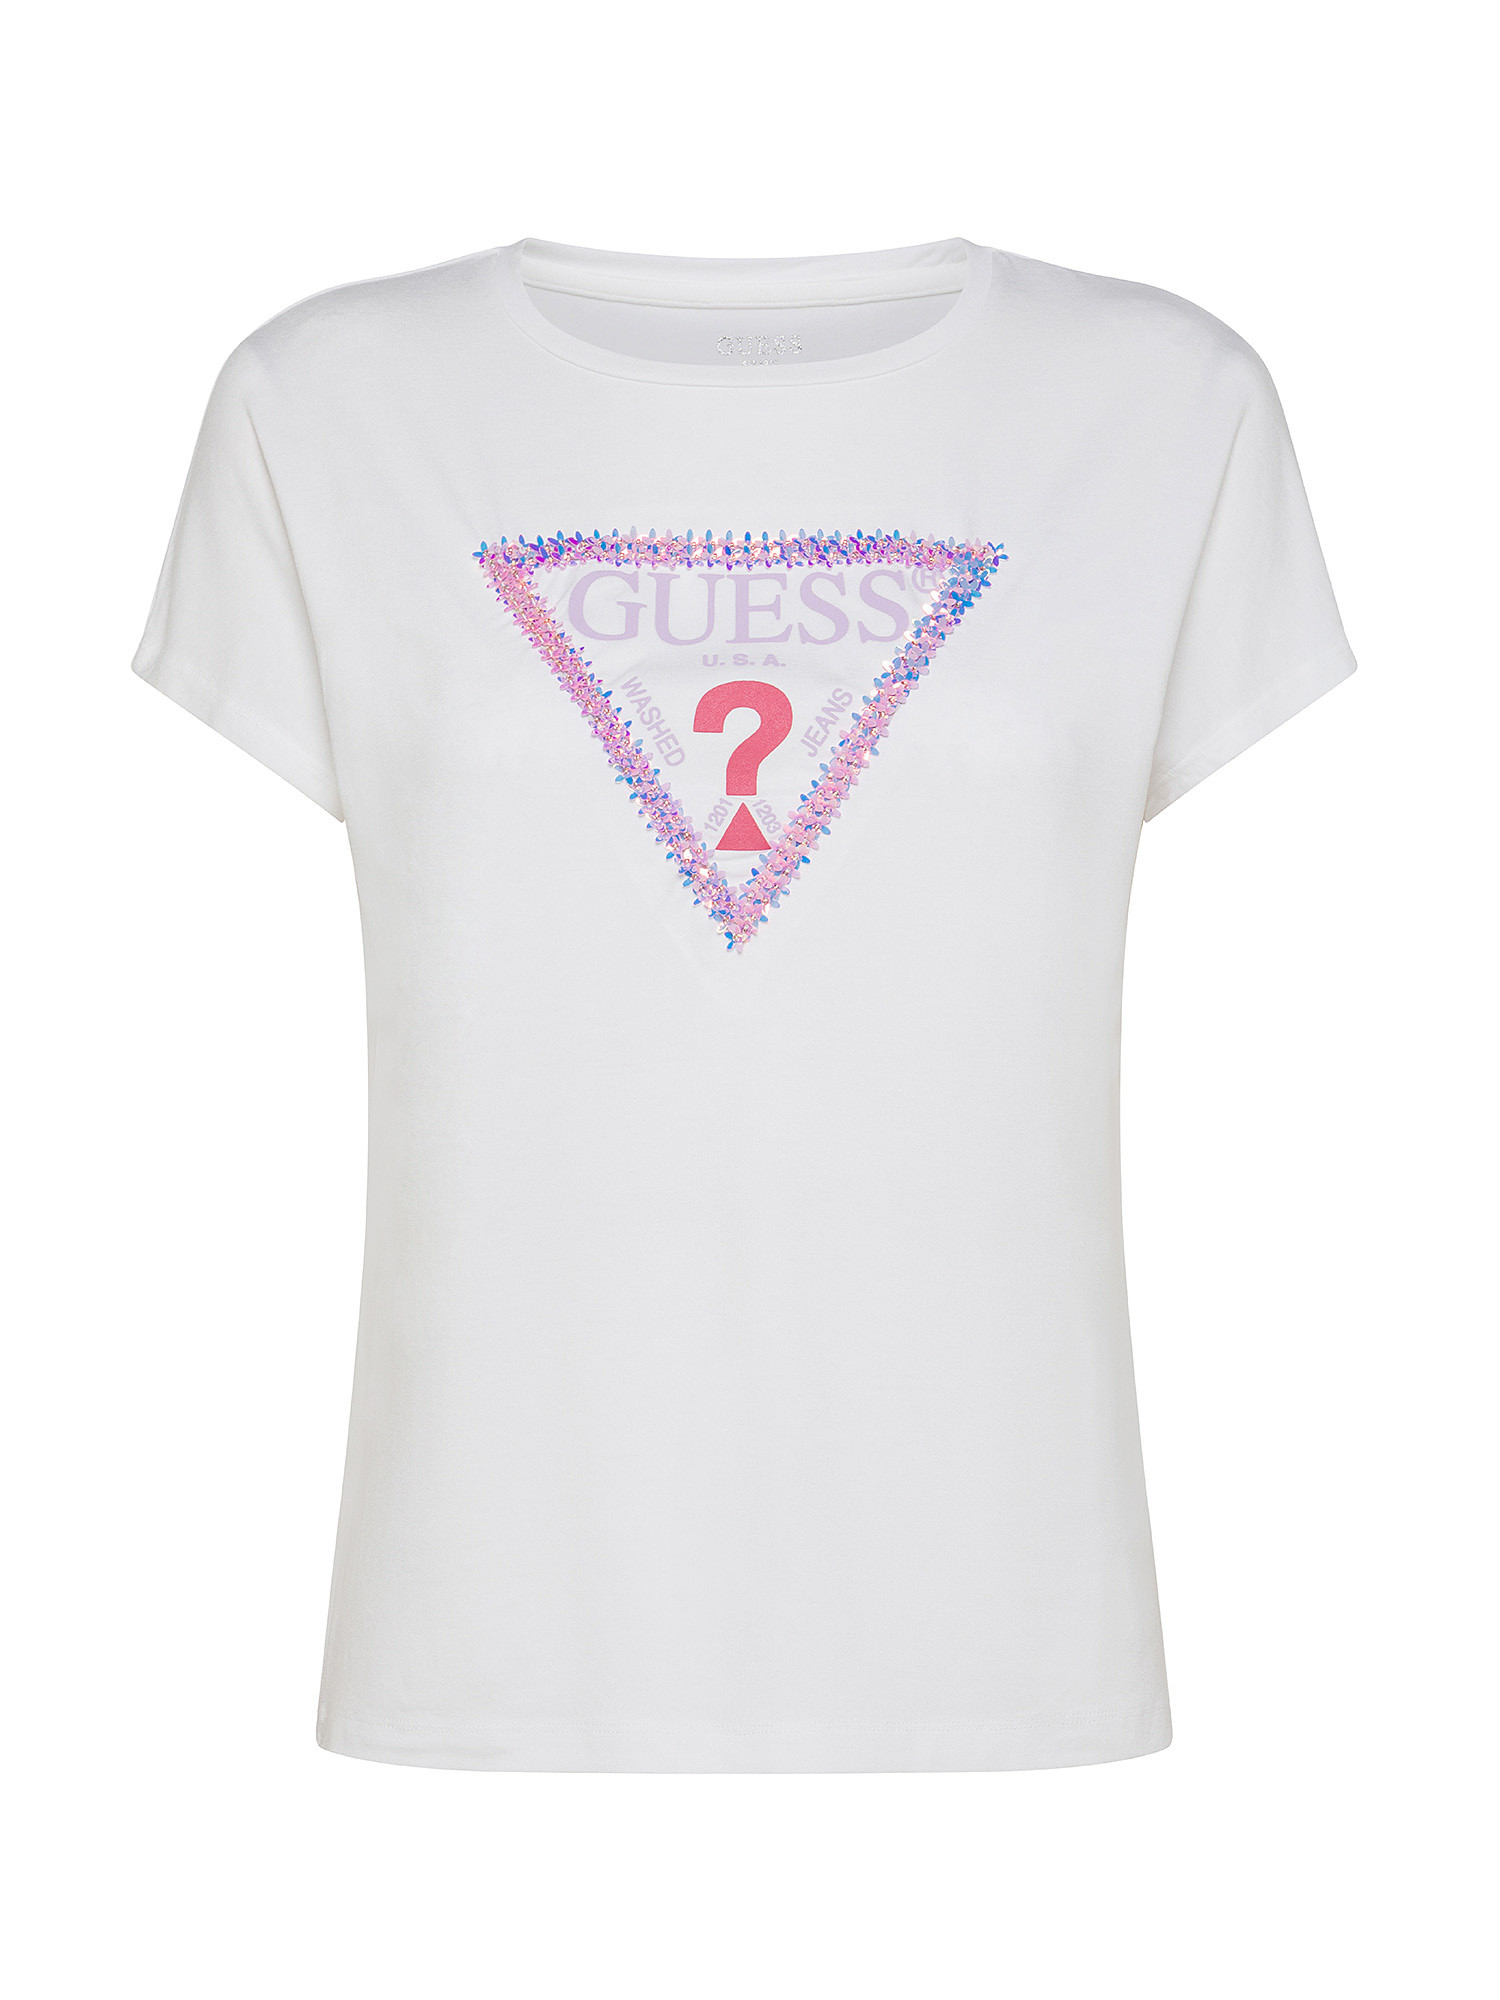 GUESS - T-shirt logo, Bianco, large image number 0